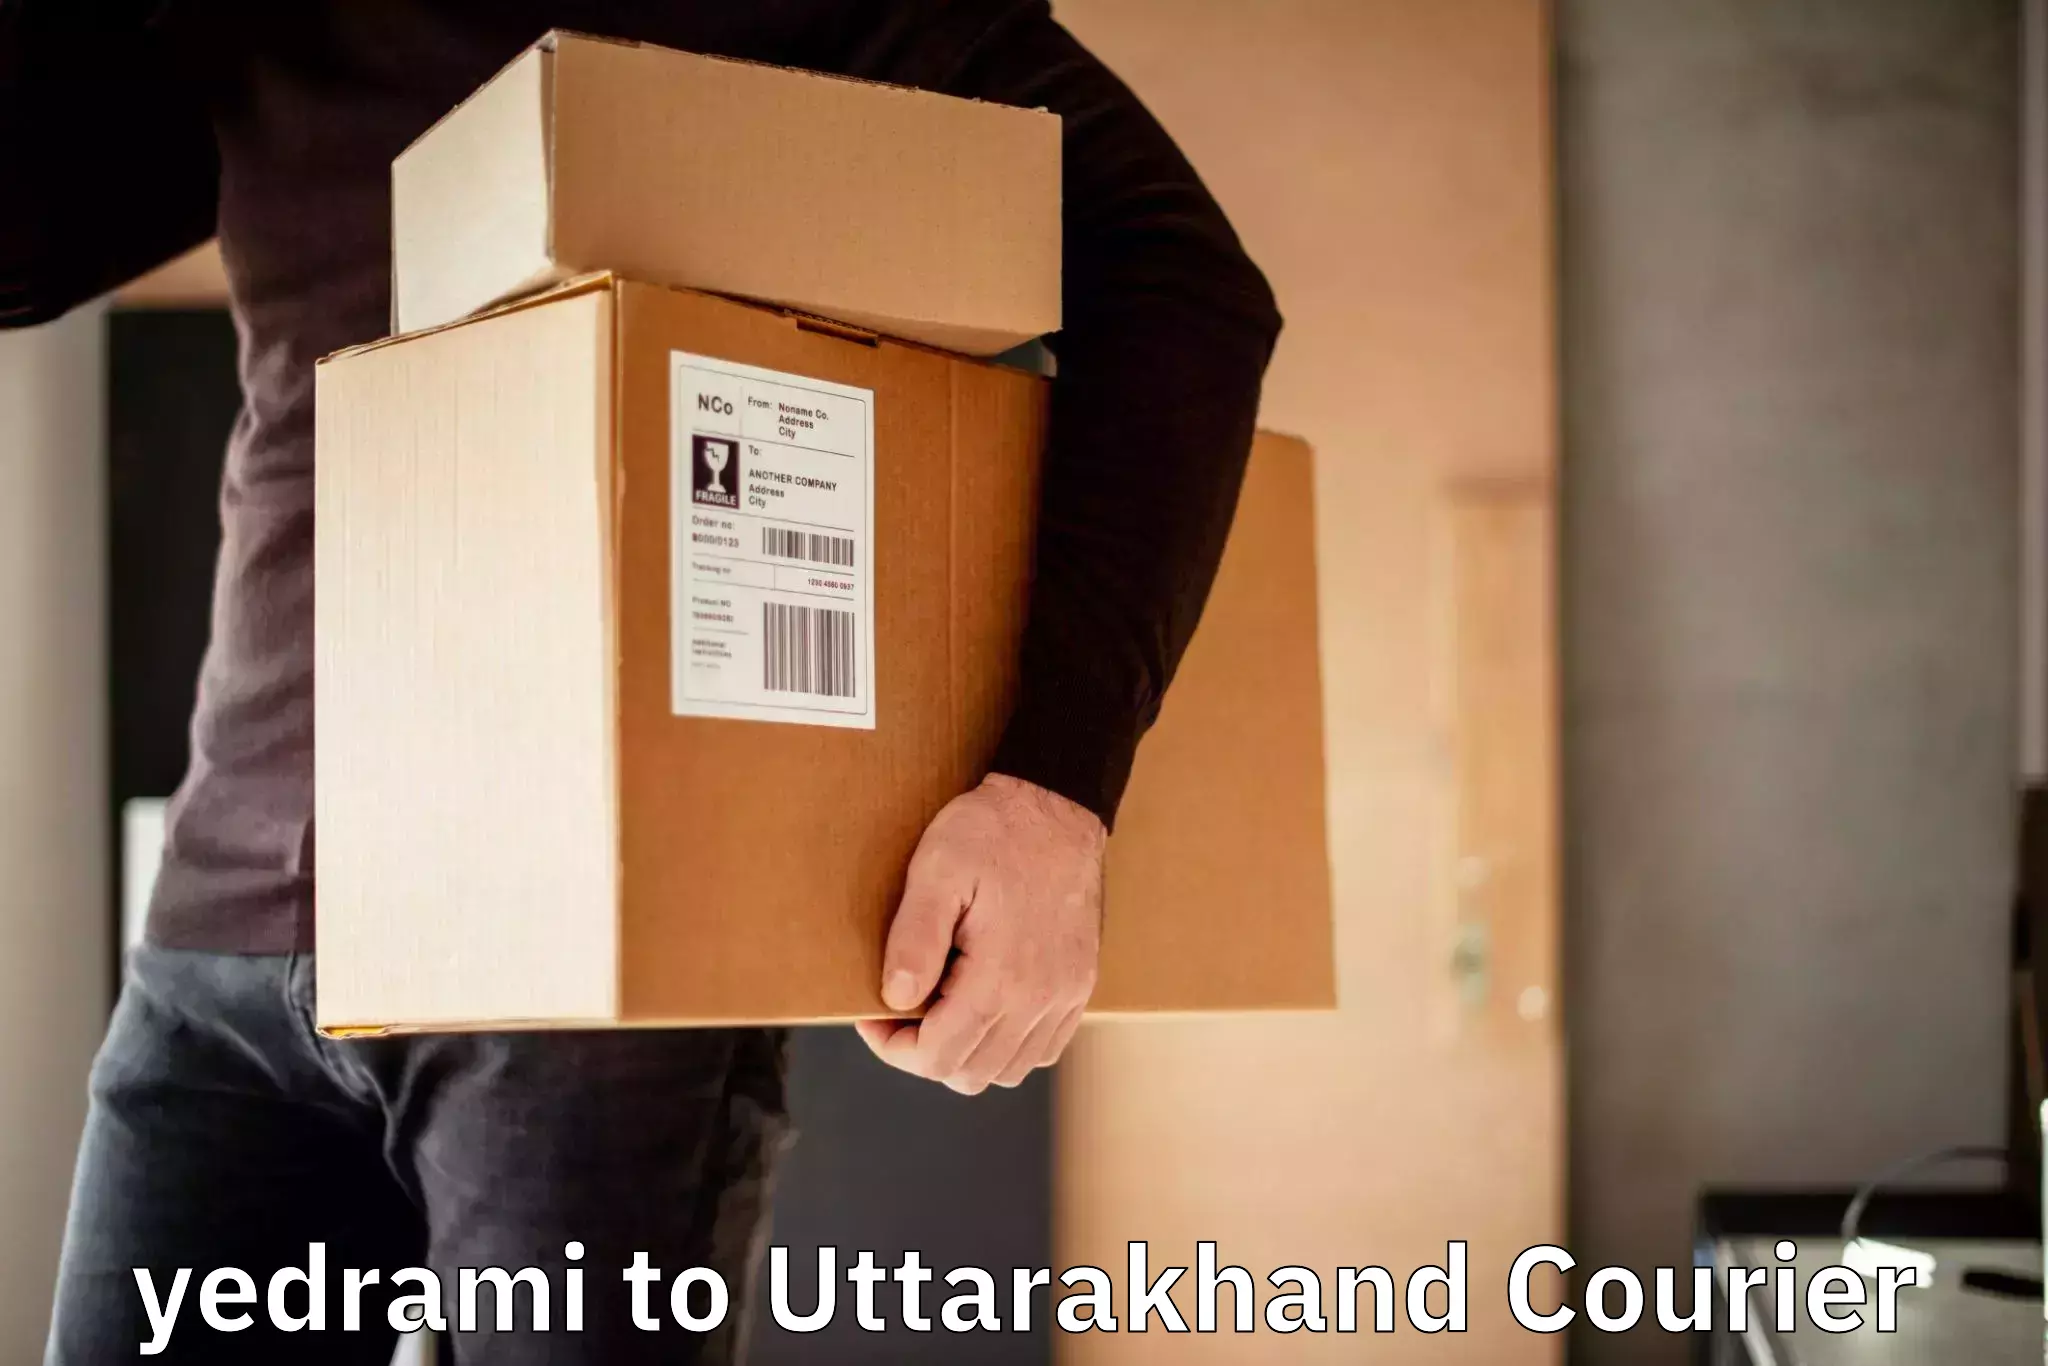 Reliable delivery network yedrami to Dehradun